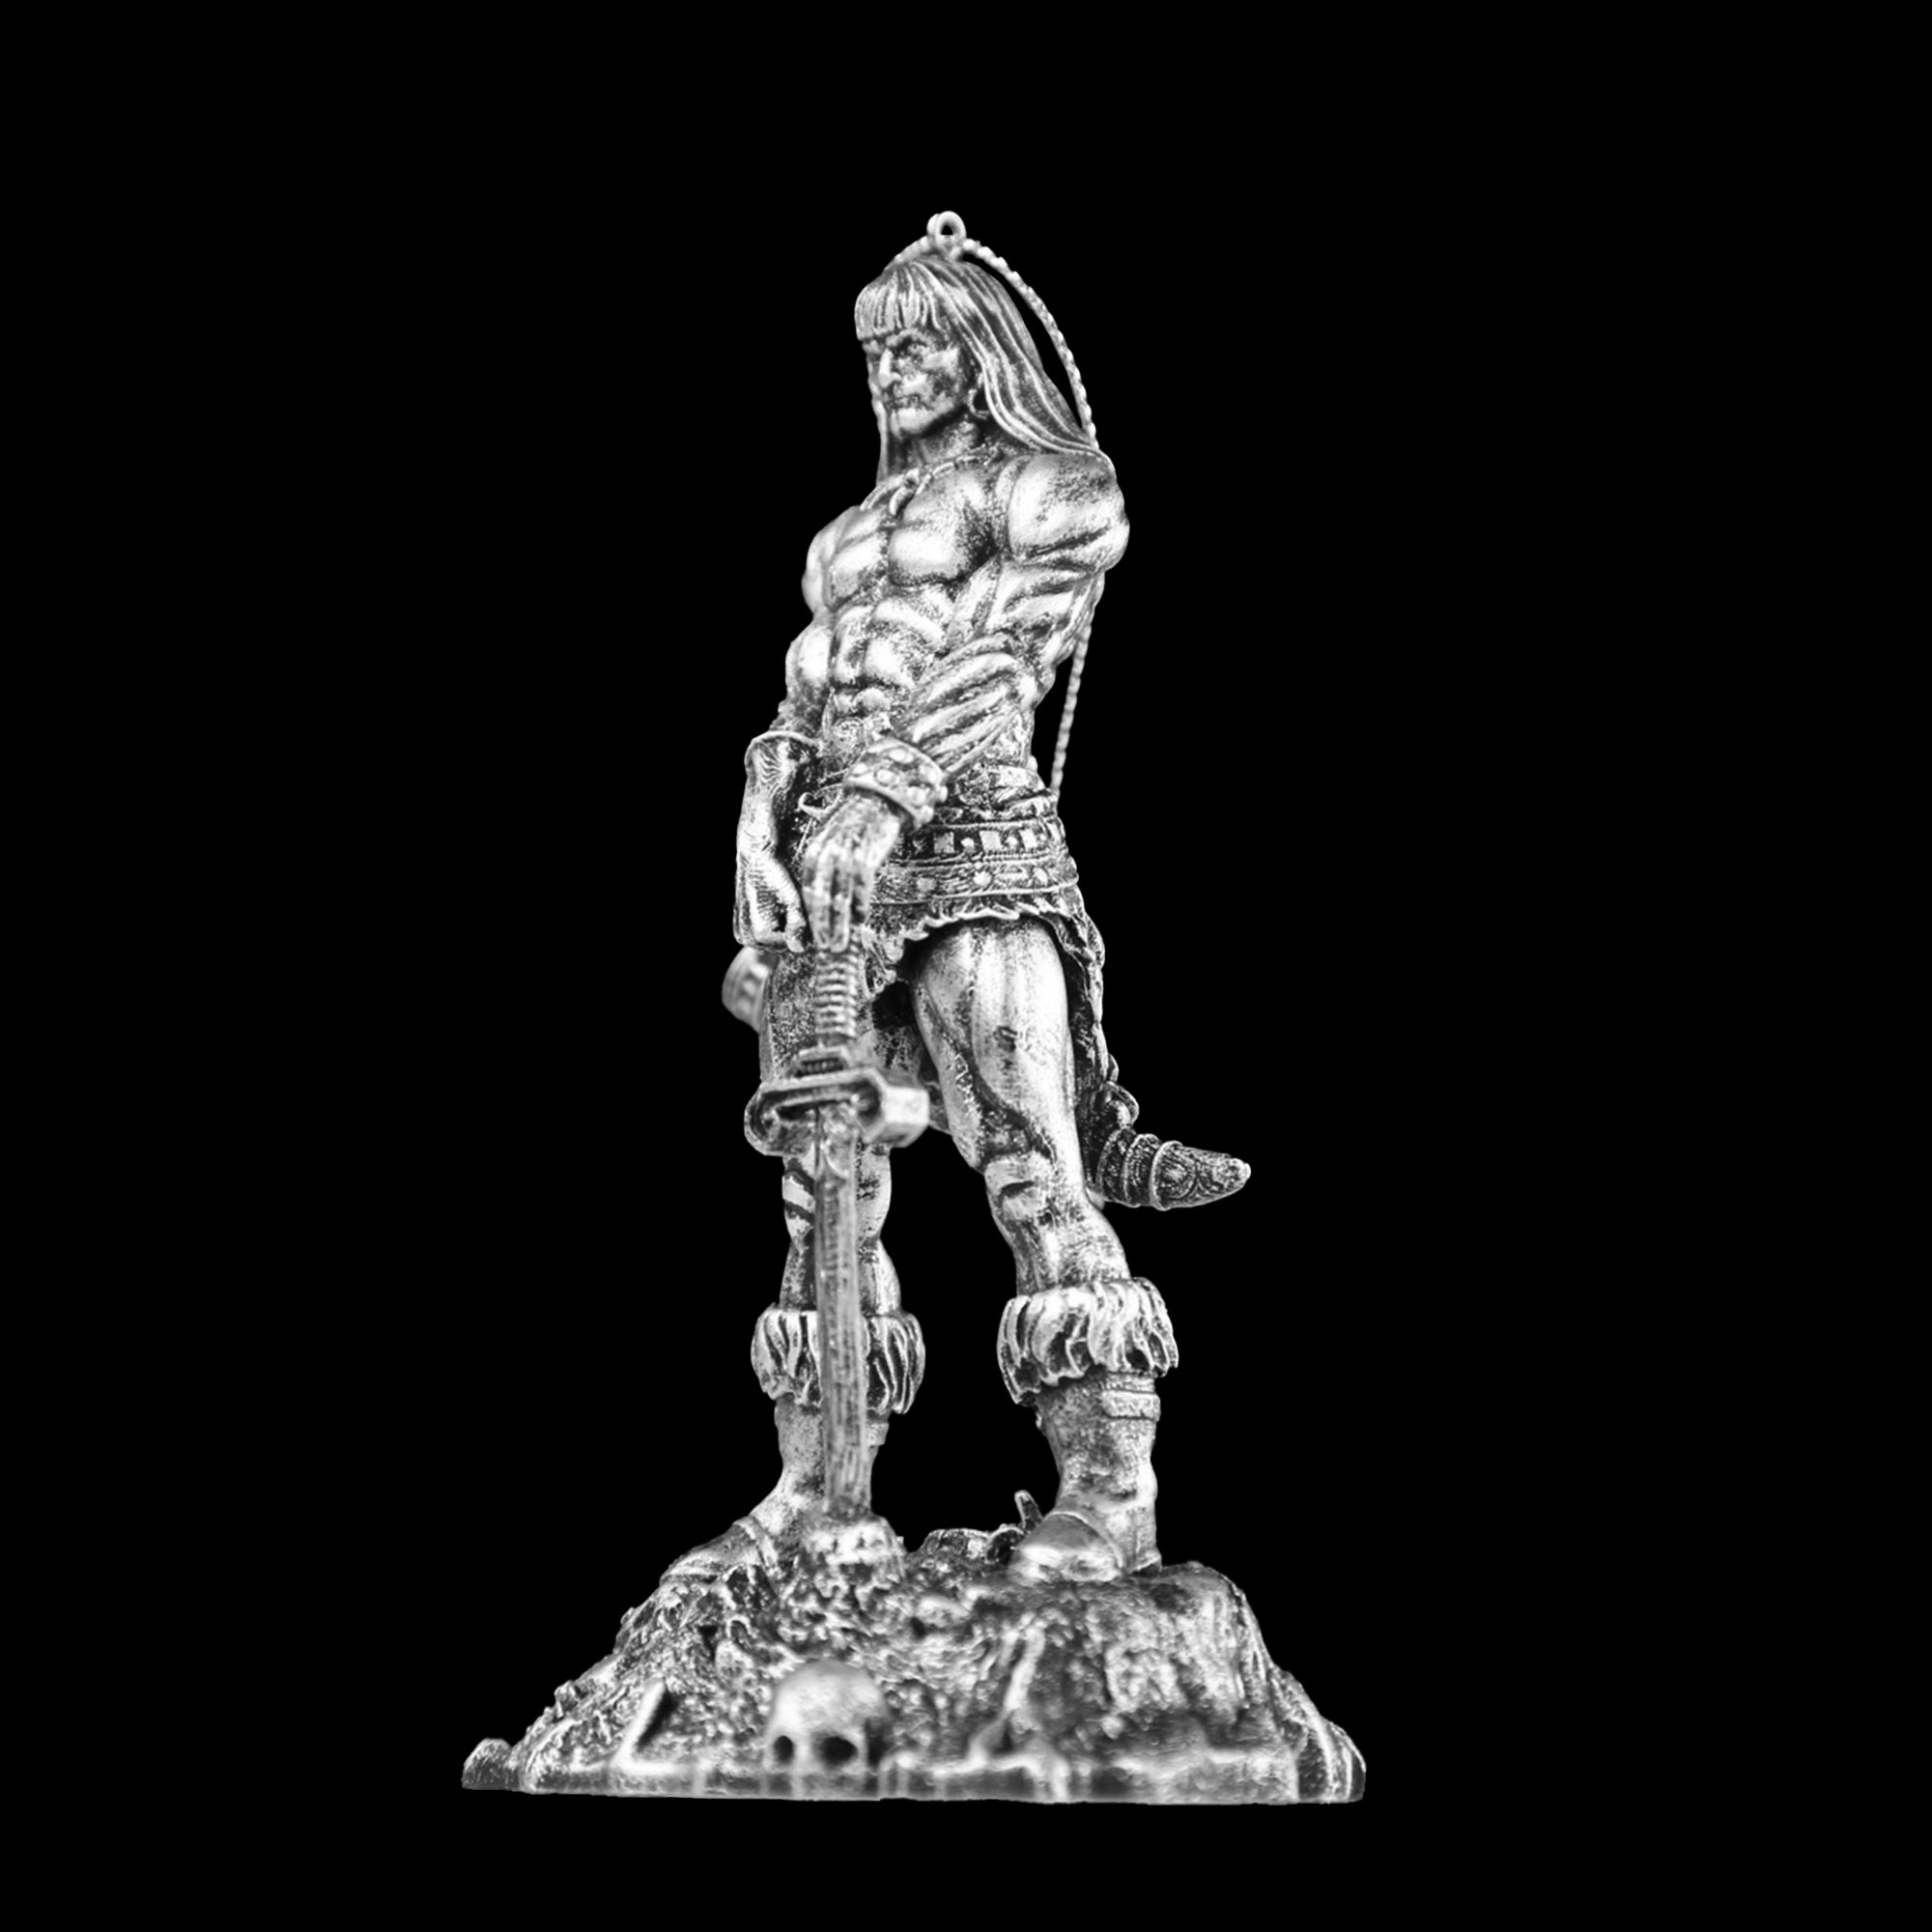 Conan The Barbarian Holiday Ornament (Antique Silver)